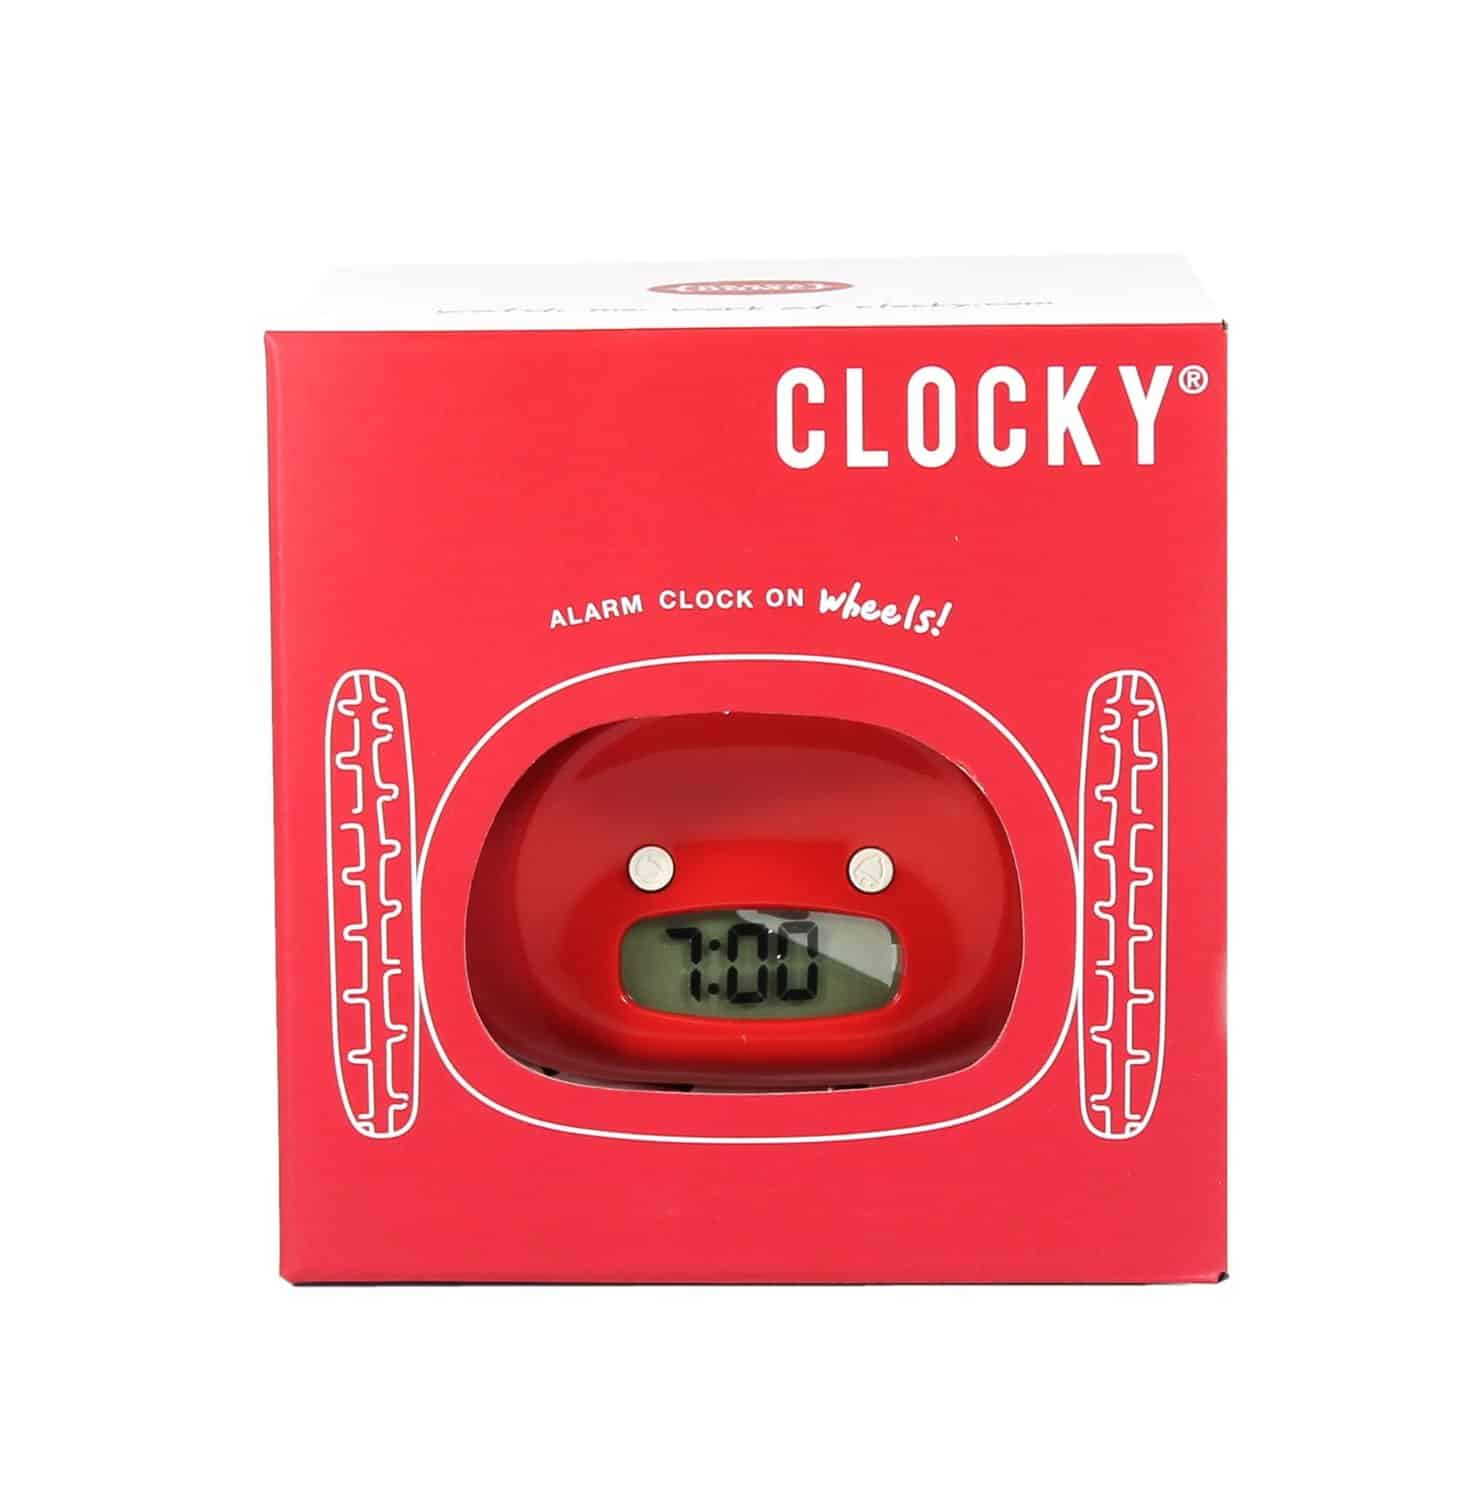 Clocky Alarm Clock Quirky Box Design Clock on Wheels Red